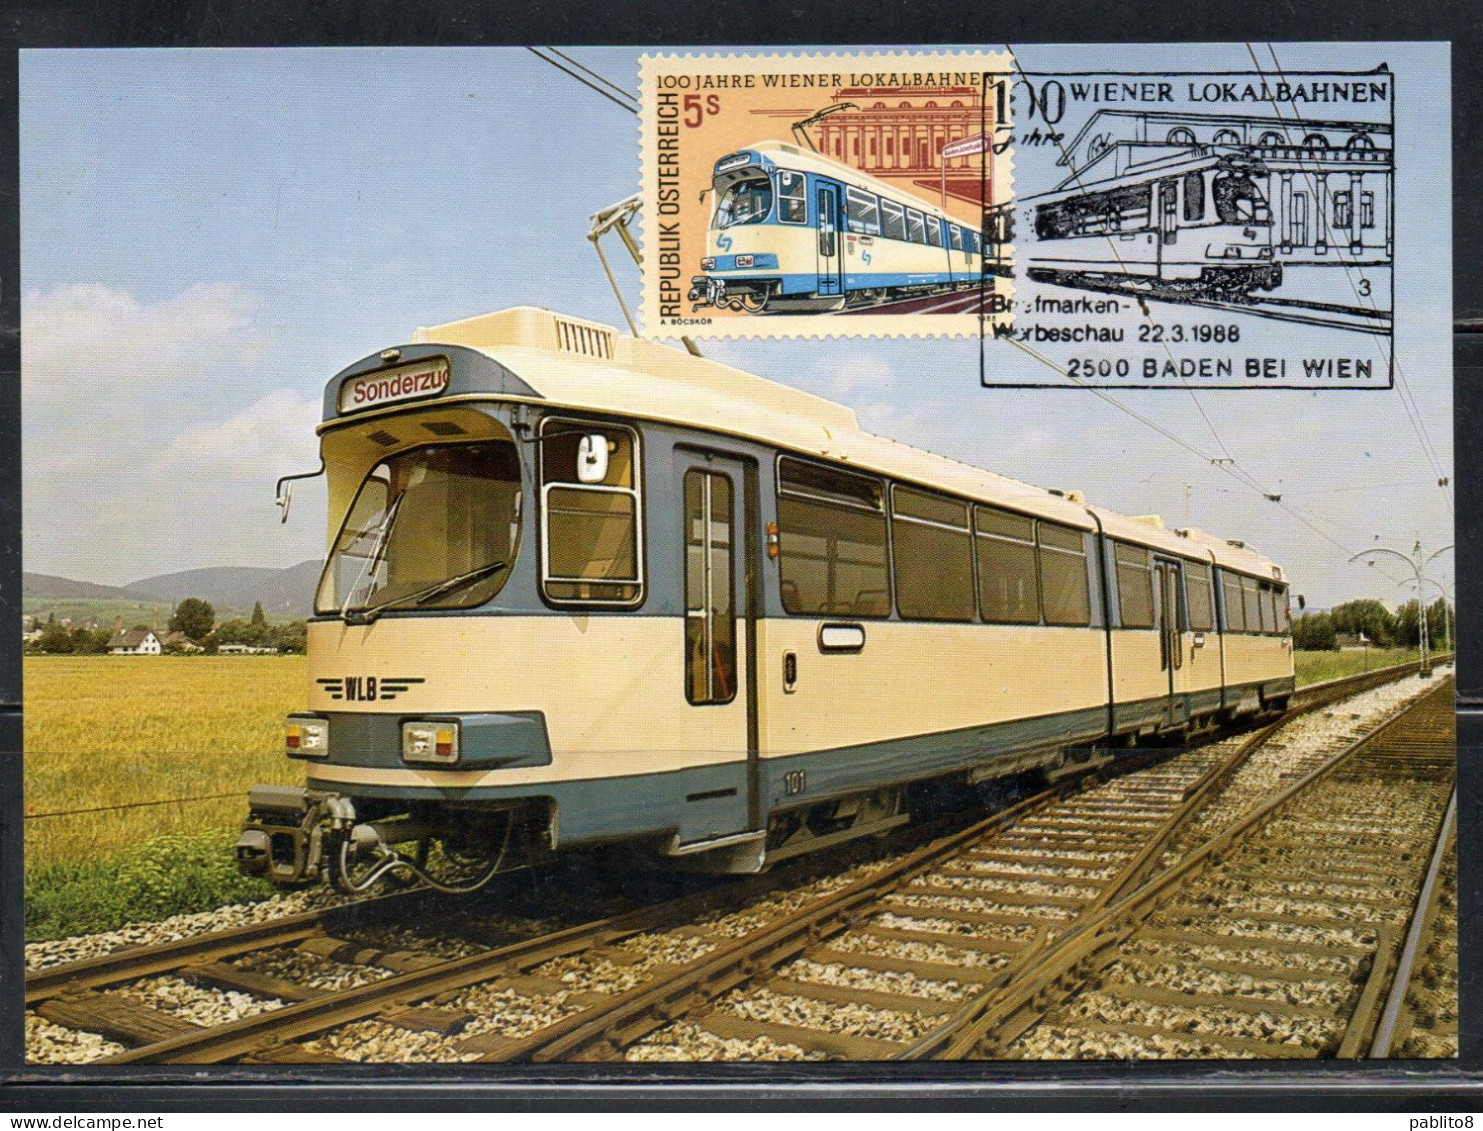 AUSTRIA ÖSTERREICH 1988 MUHIKREIS RAILWAY CENTENARY ELECTRIC TRAIN JOSEPSPLATZ VIENNA LOCAL  5s CARTE MAXIMUM MAXI CARD - Maximum Cards